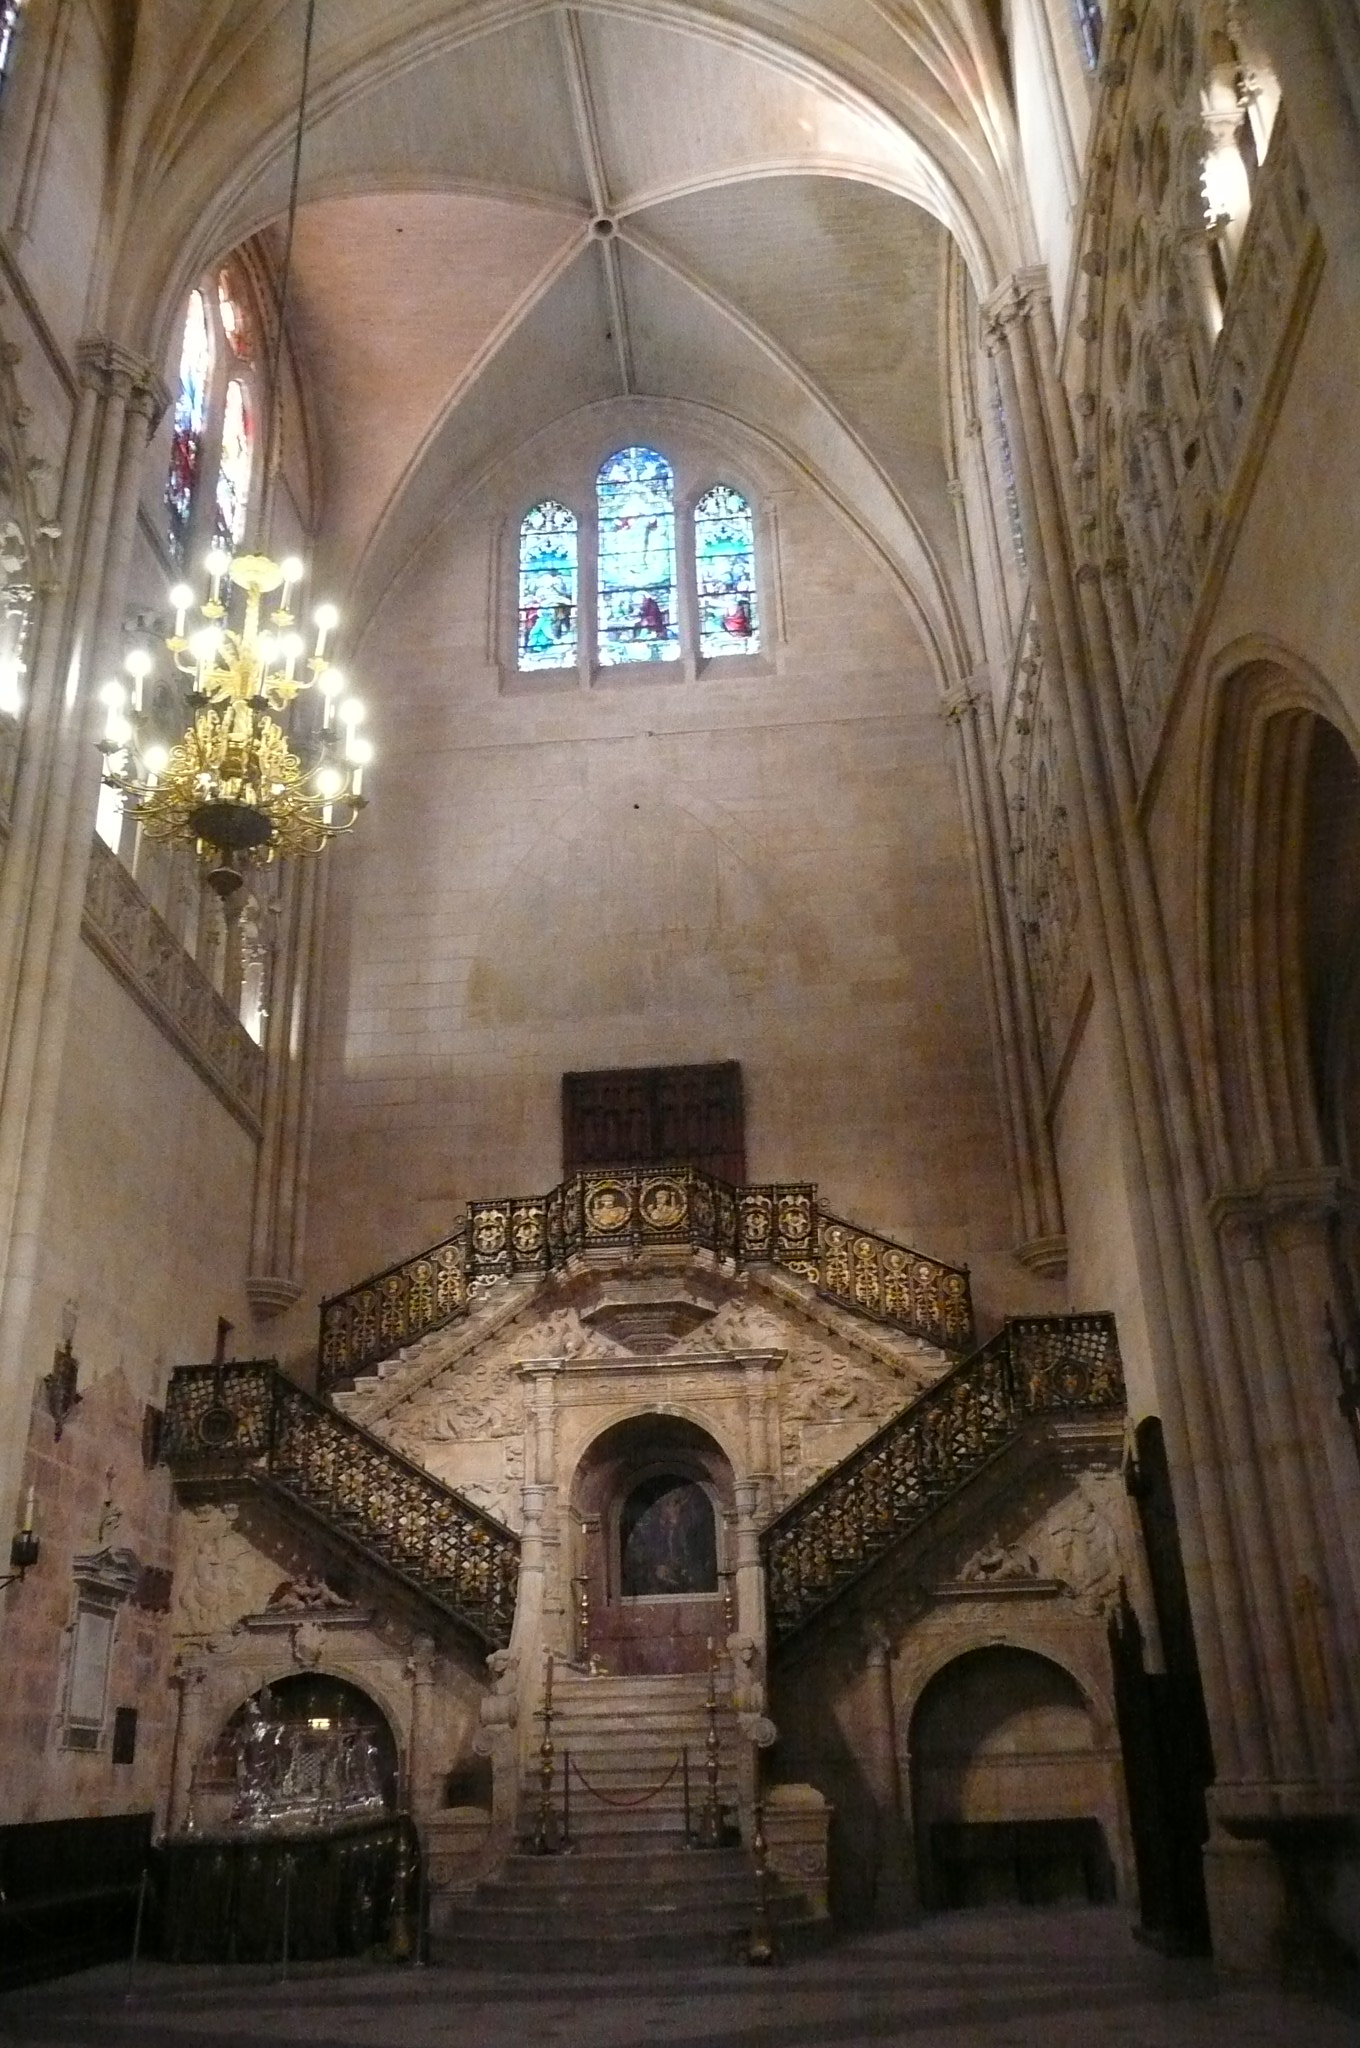 La escalera dorada de Diego de Siloé (catedral de Burgos)